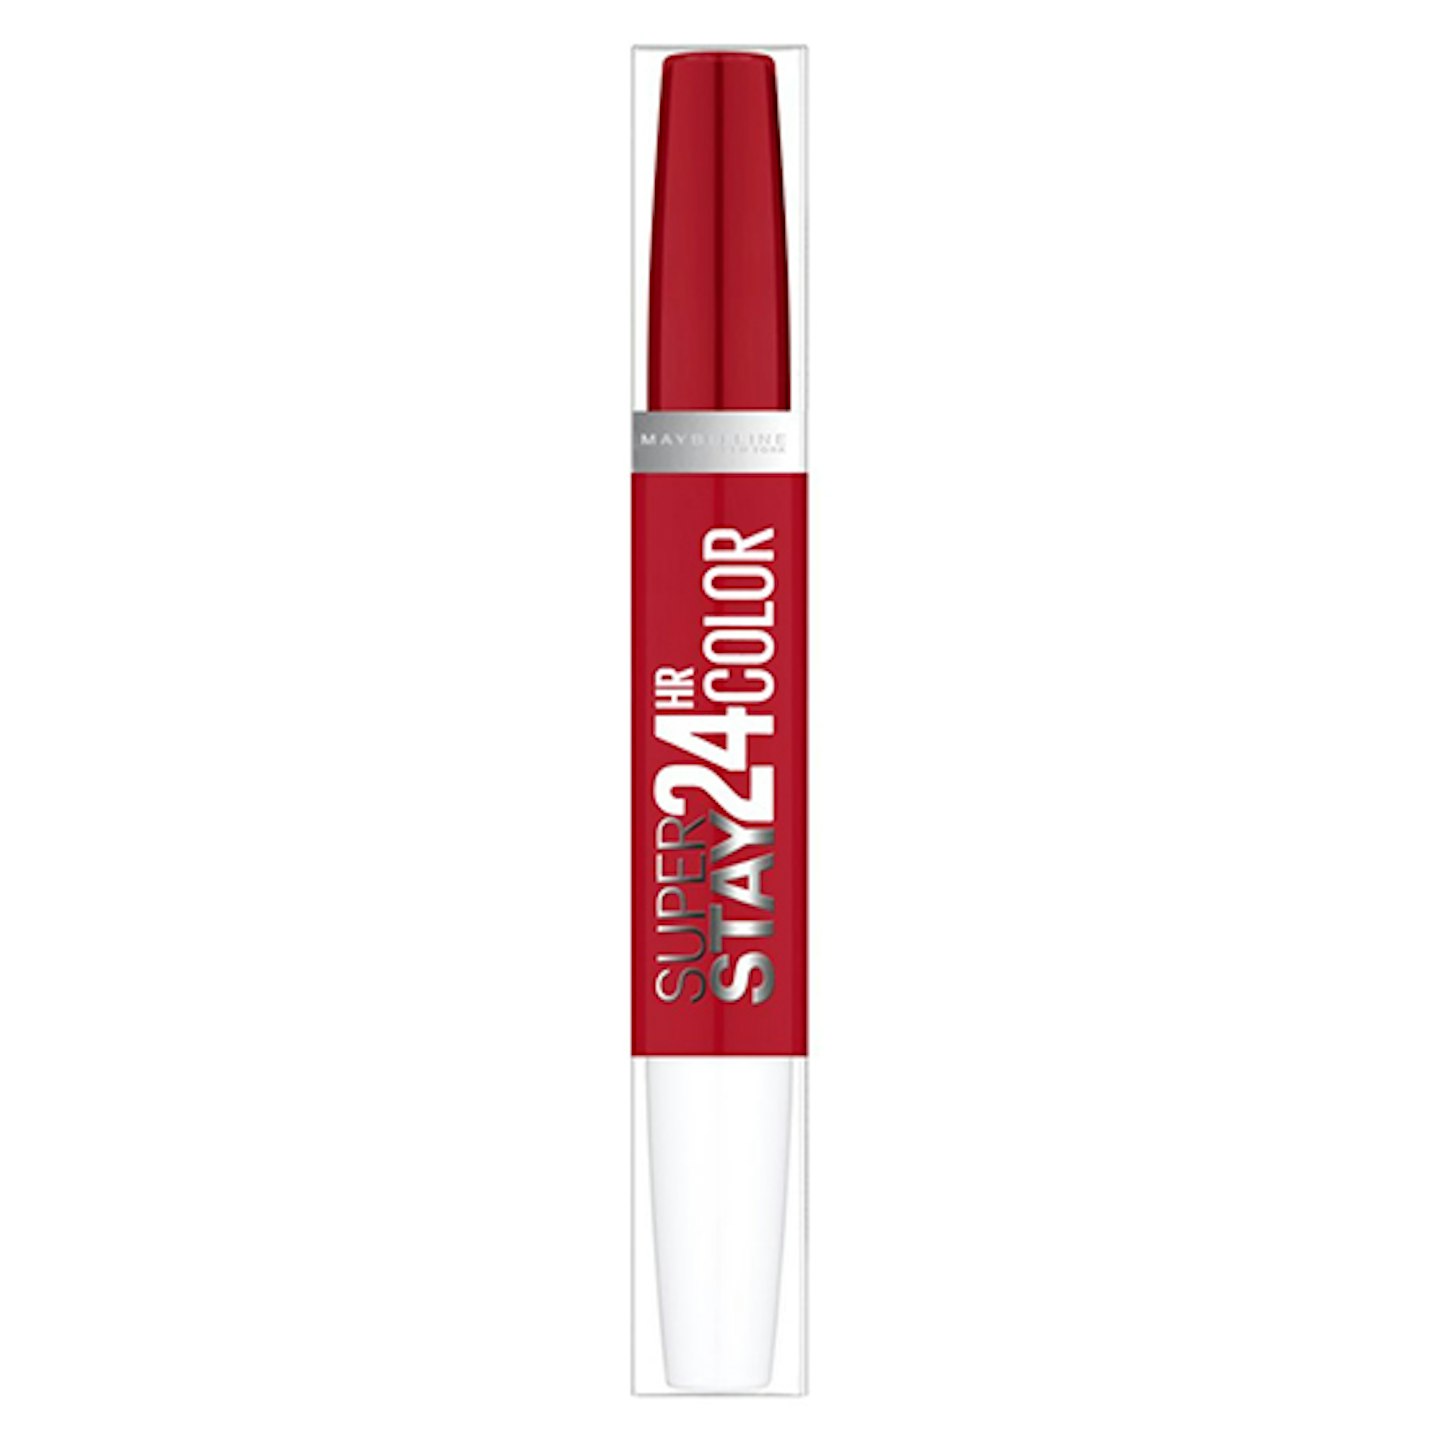 Superstay lipstick